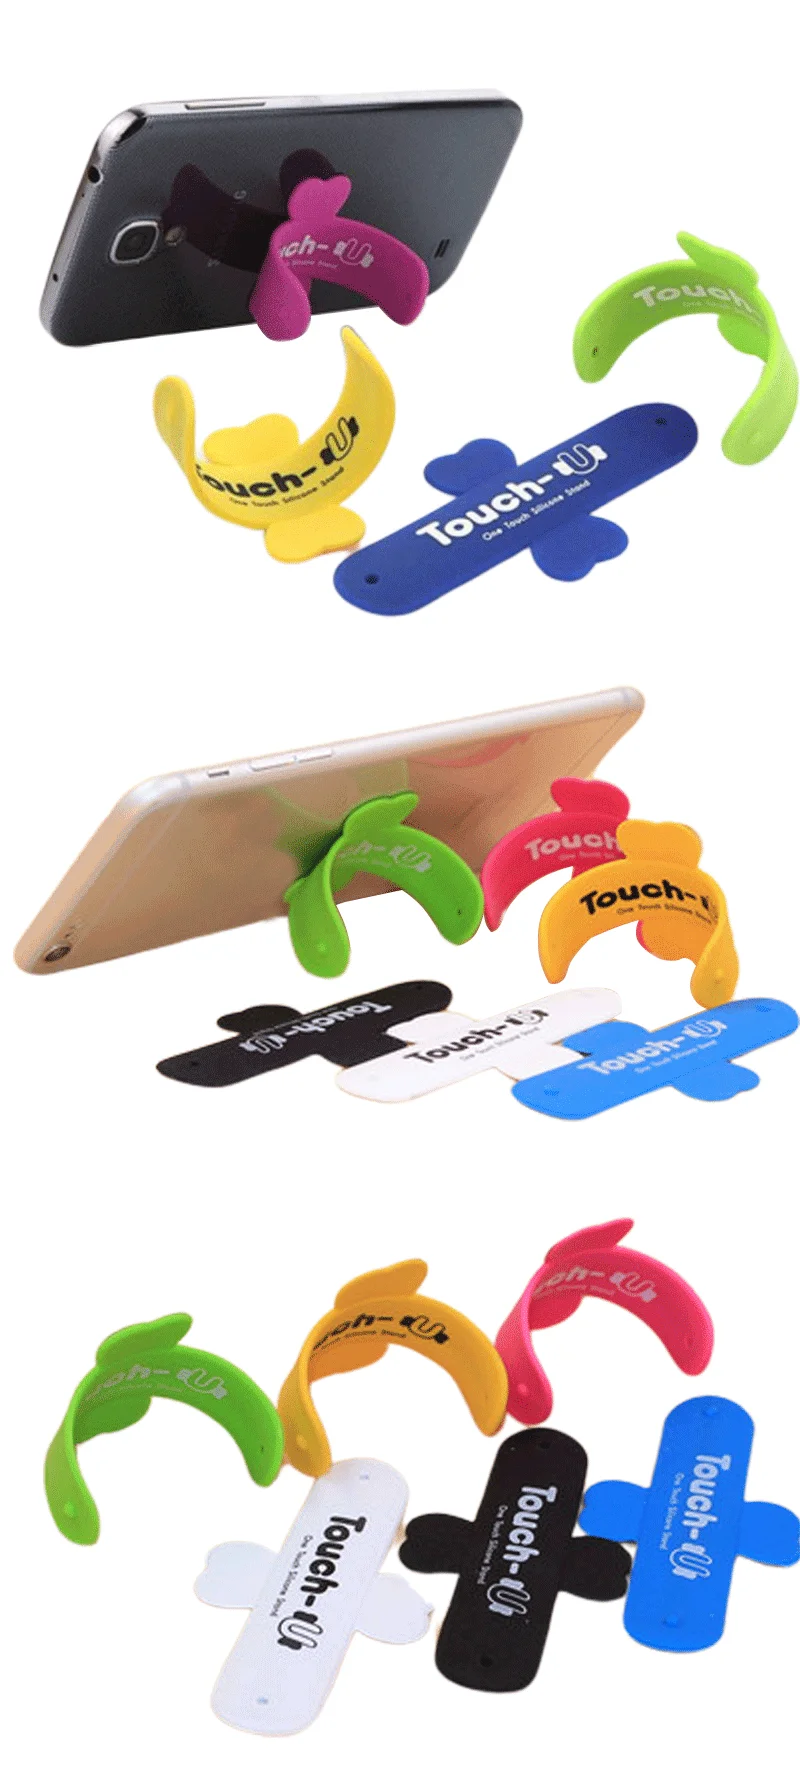 Custom Popular Design Multi-style Silicone Phone Card Sets Mobile Phone Card Holder Mobile Phone Case Credit Card Bracket